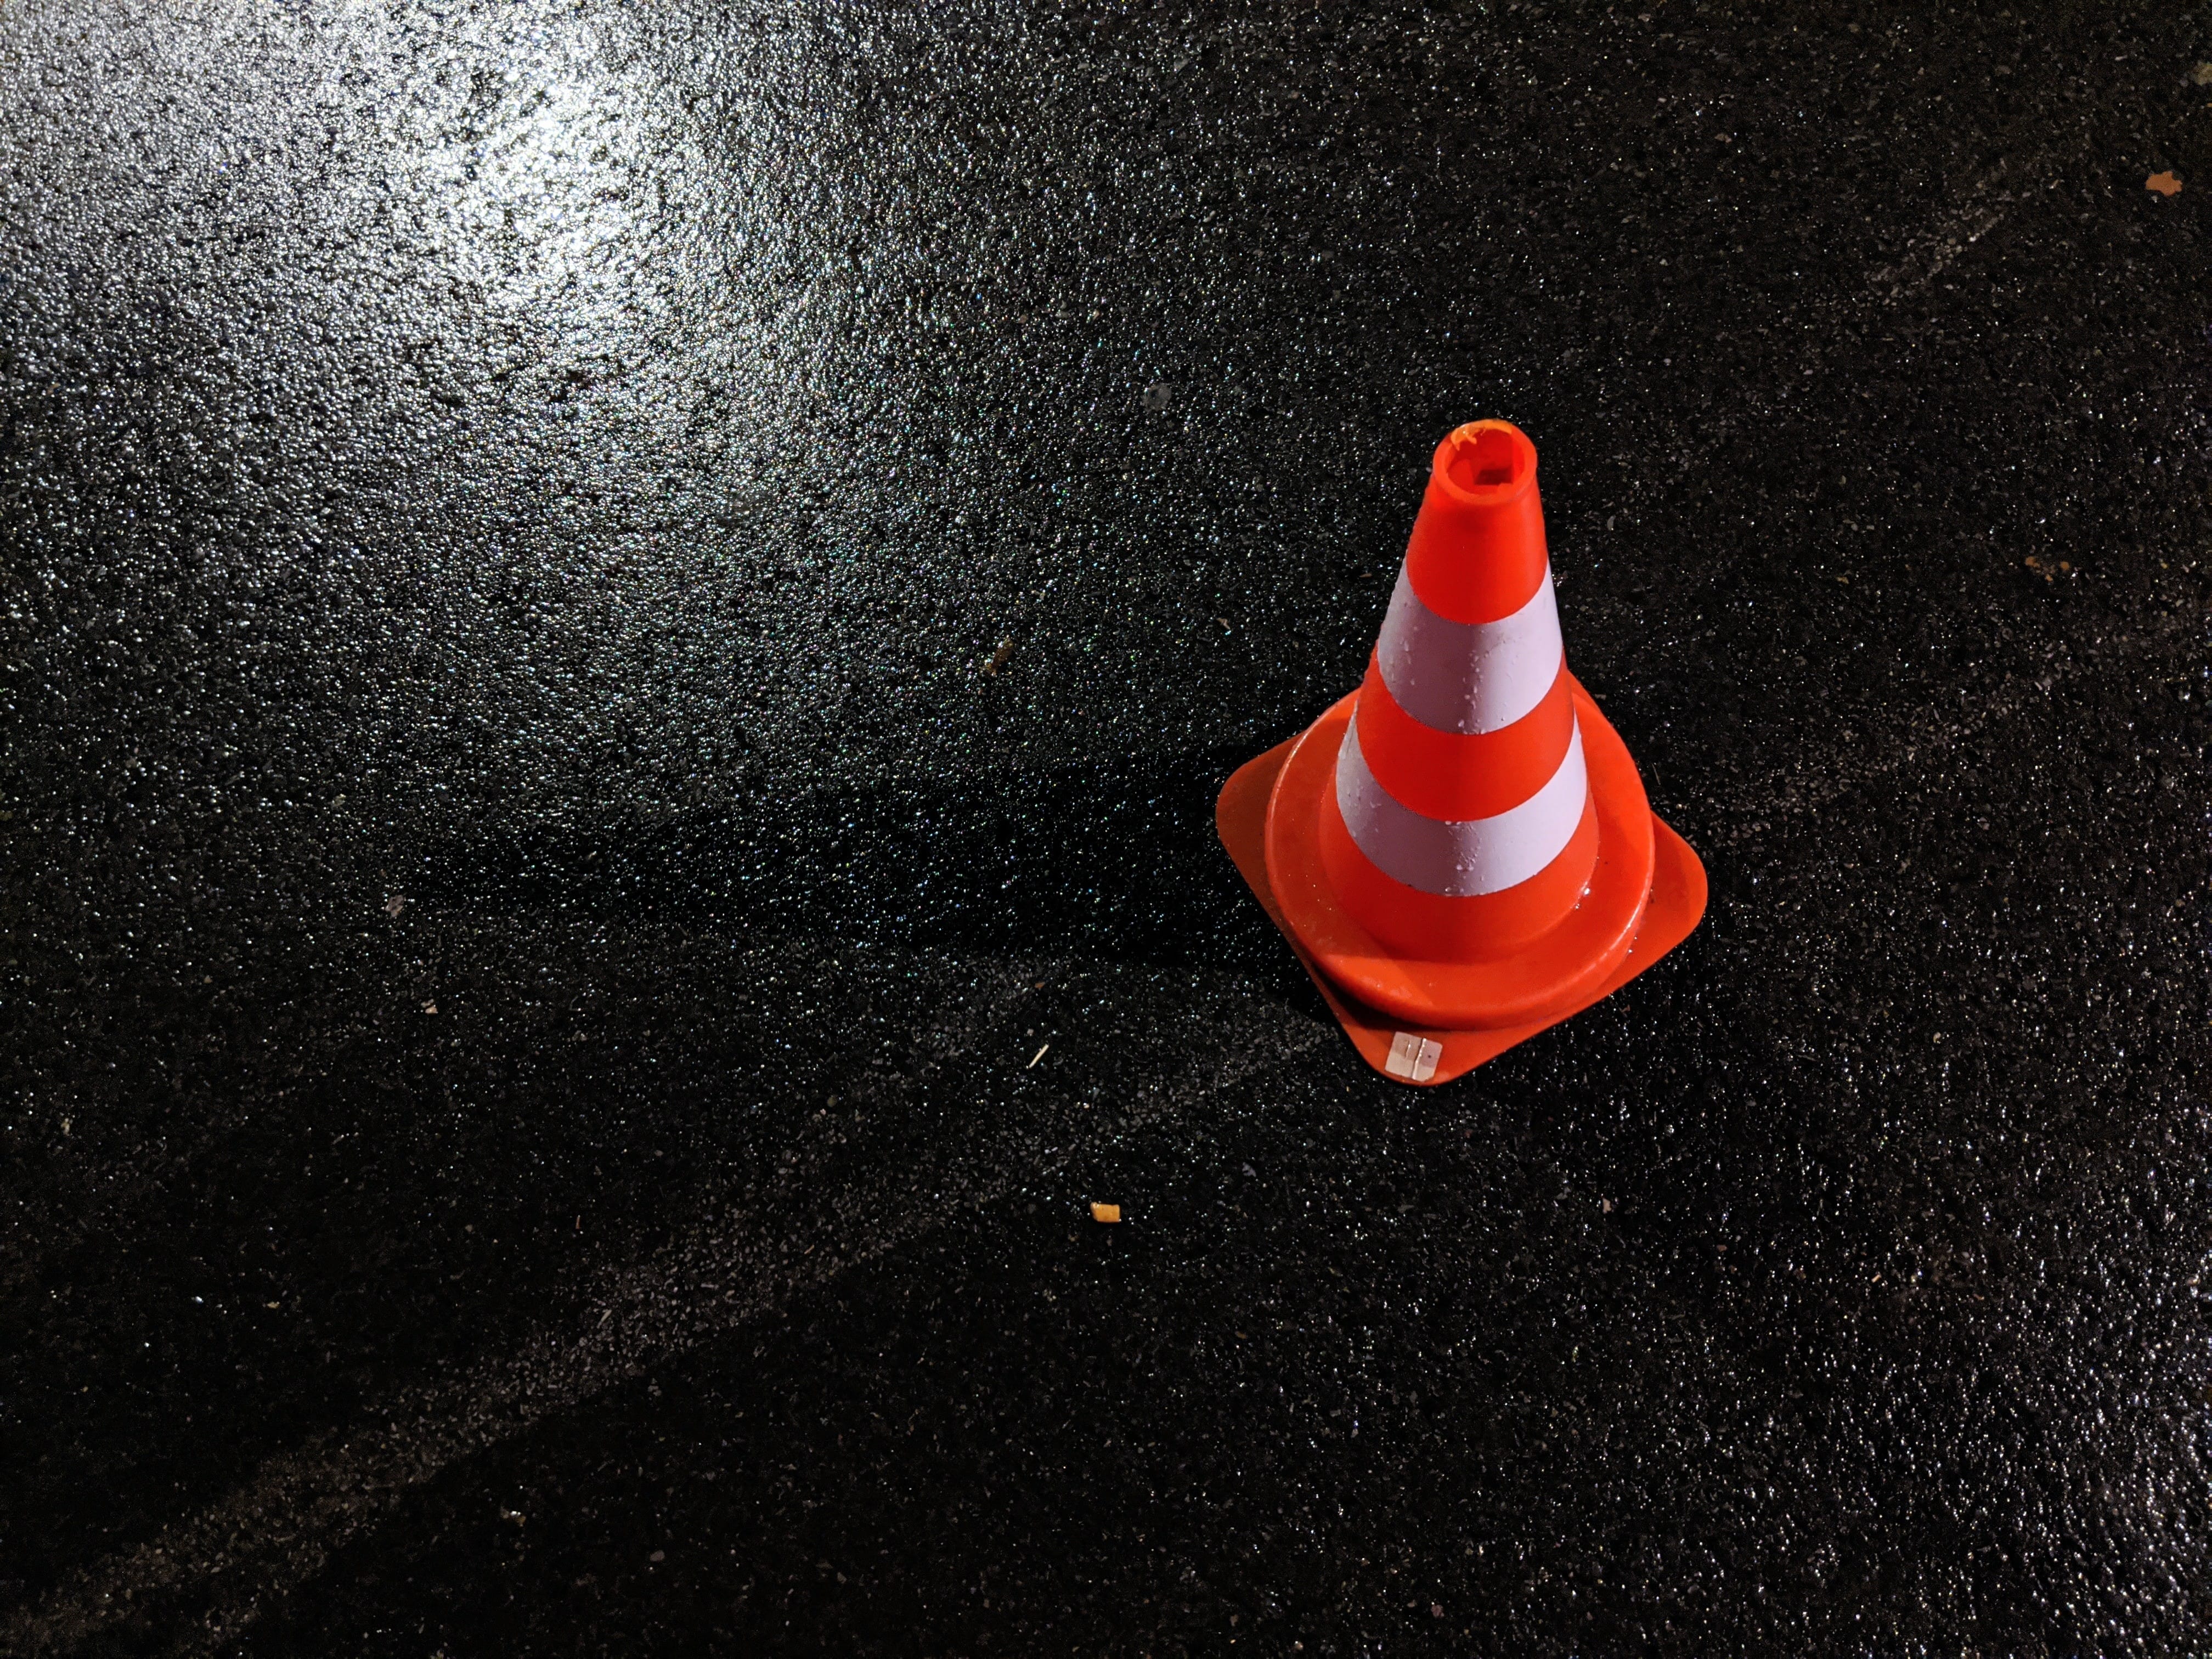 Orange and white traffic cone on dark pavement; image by Lucian Alexe, via Unsplash.com.